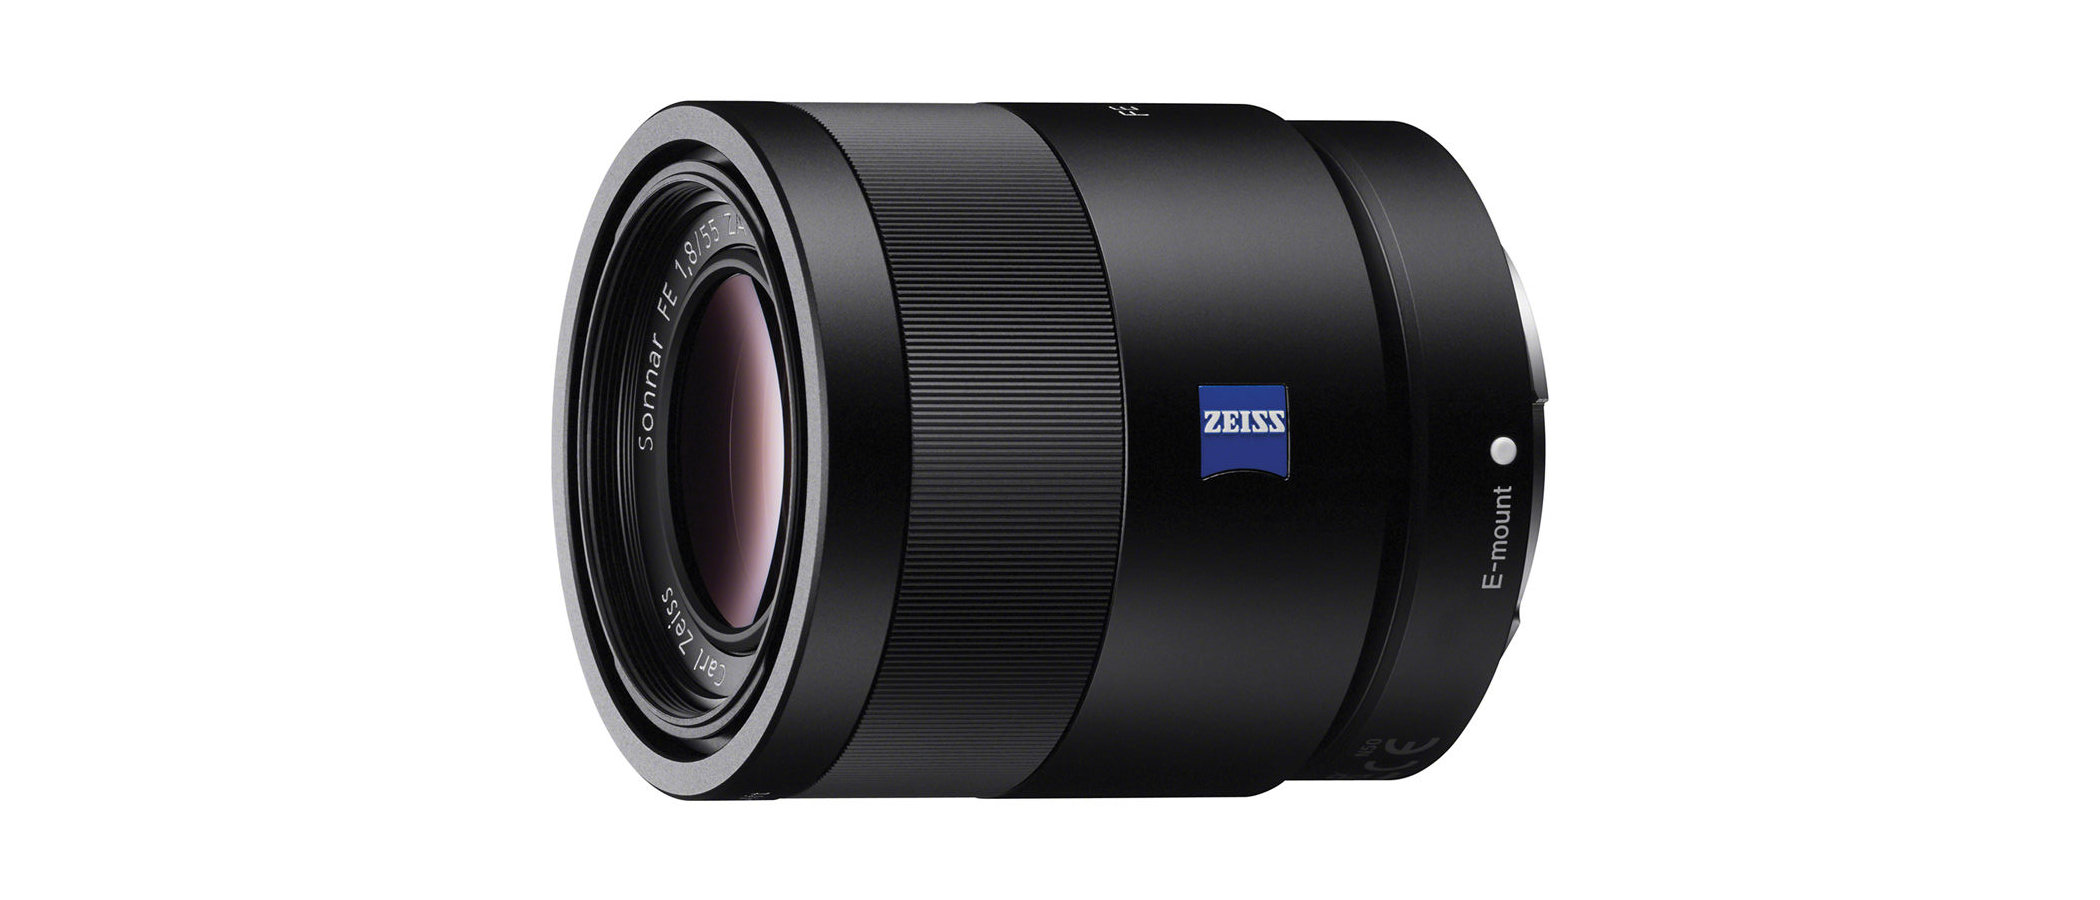 Sony Sonnar T* FE 55mm f/1.8 ZA review | Digital Camera World